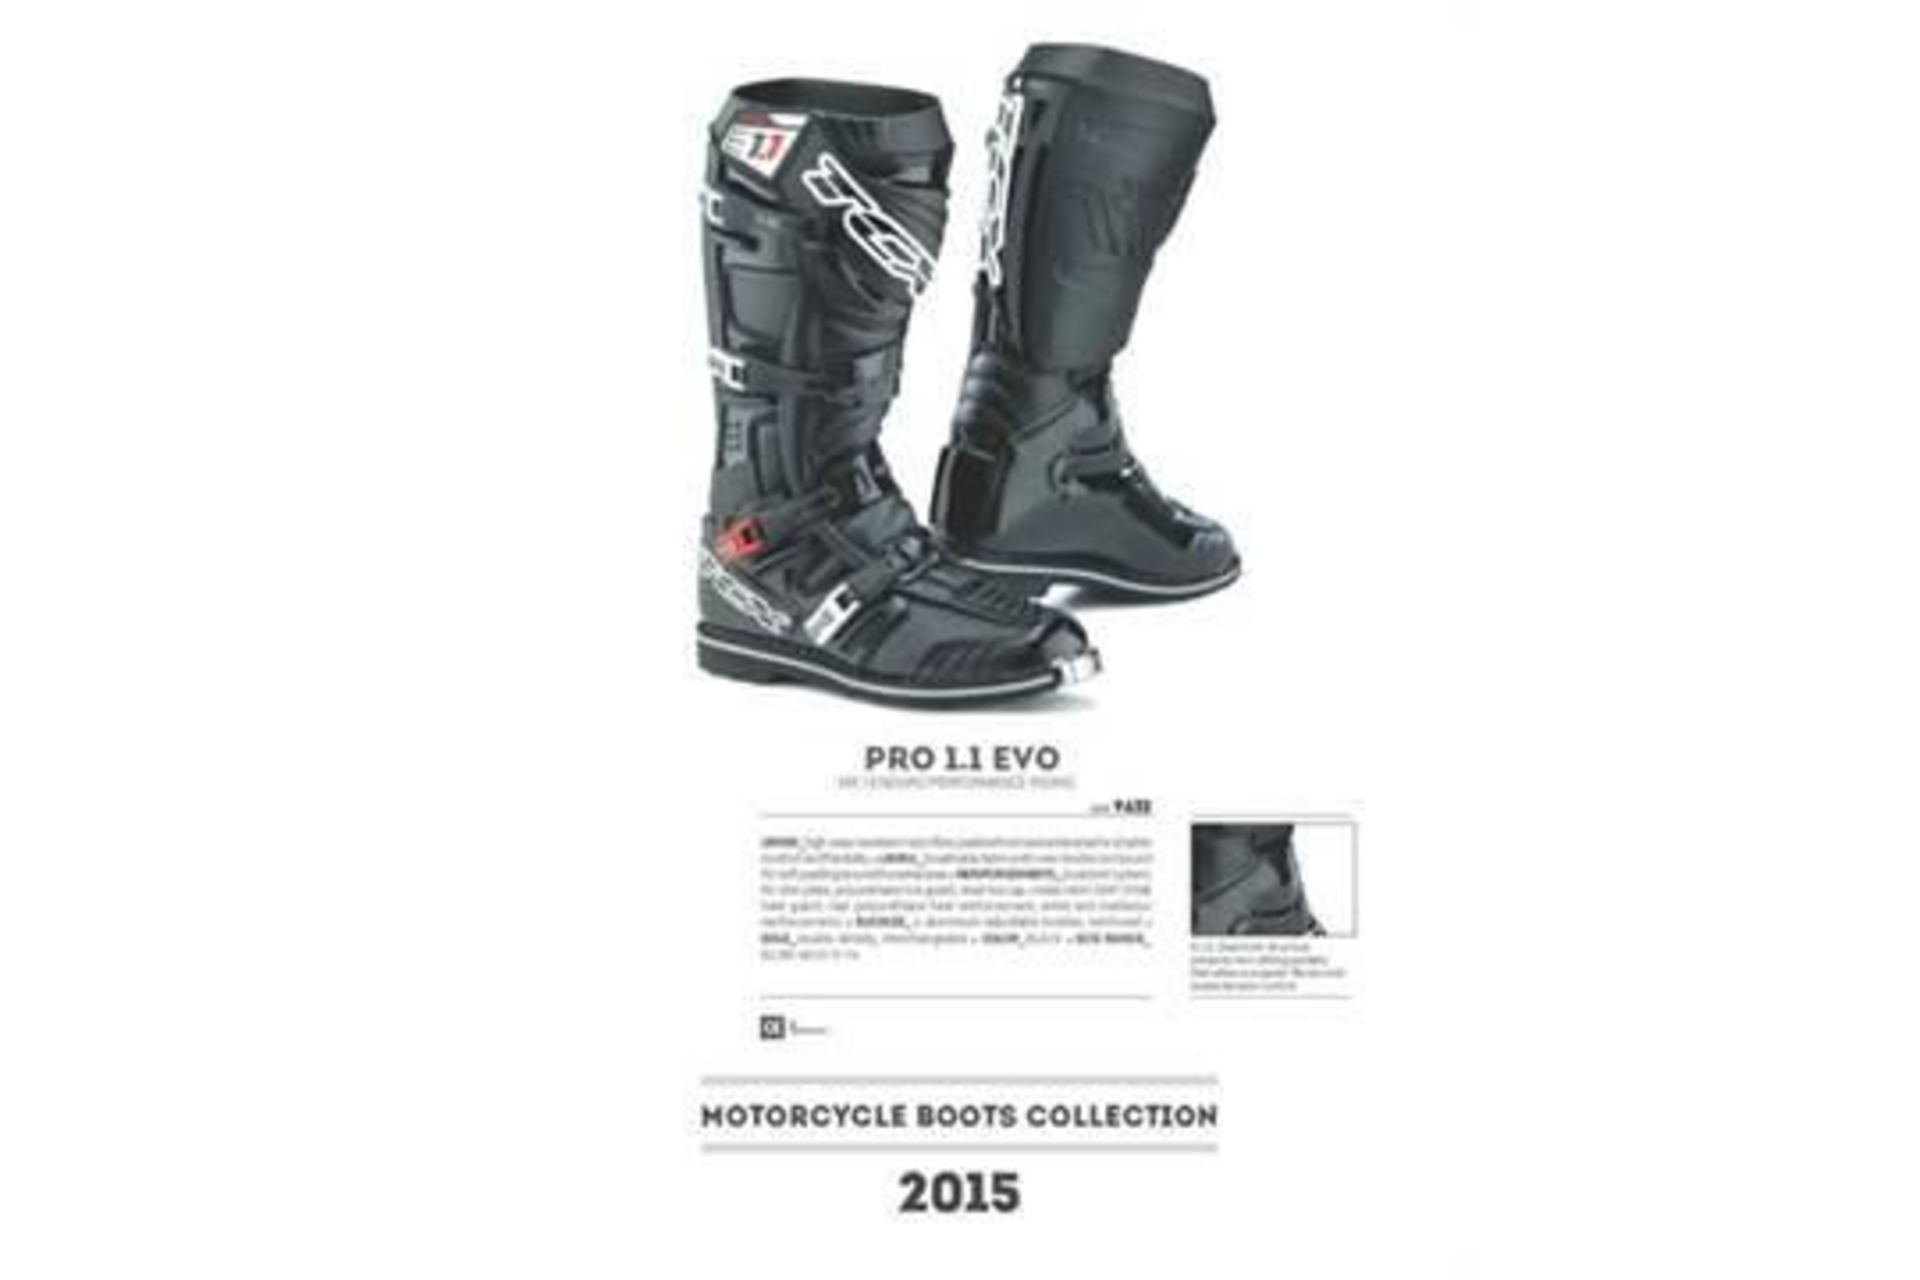 TCX Pro 1.1 Evo Motocross Boots - Image 6 of 6